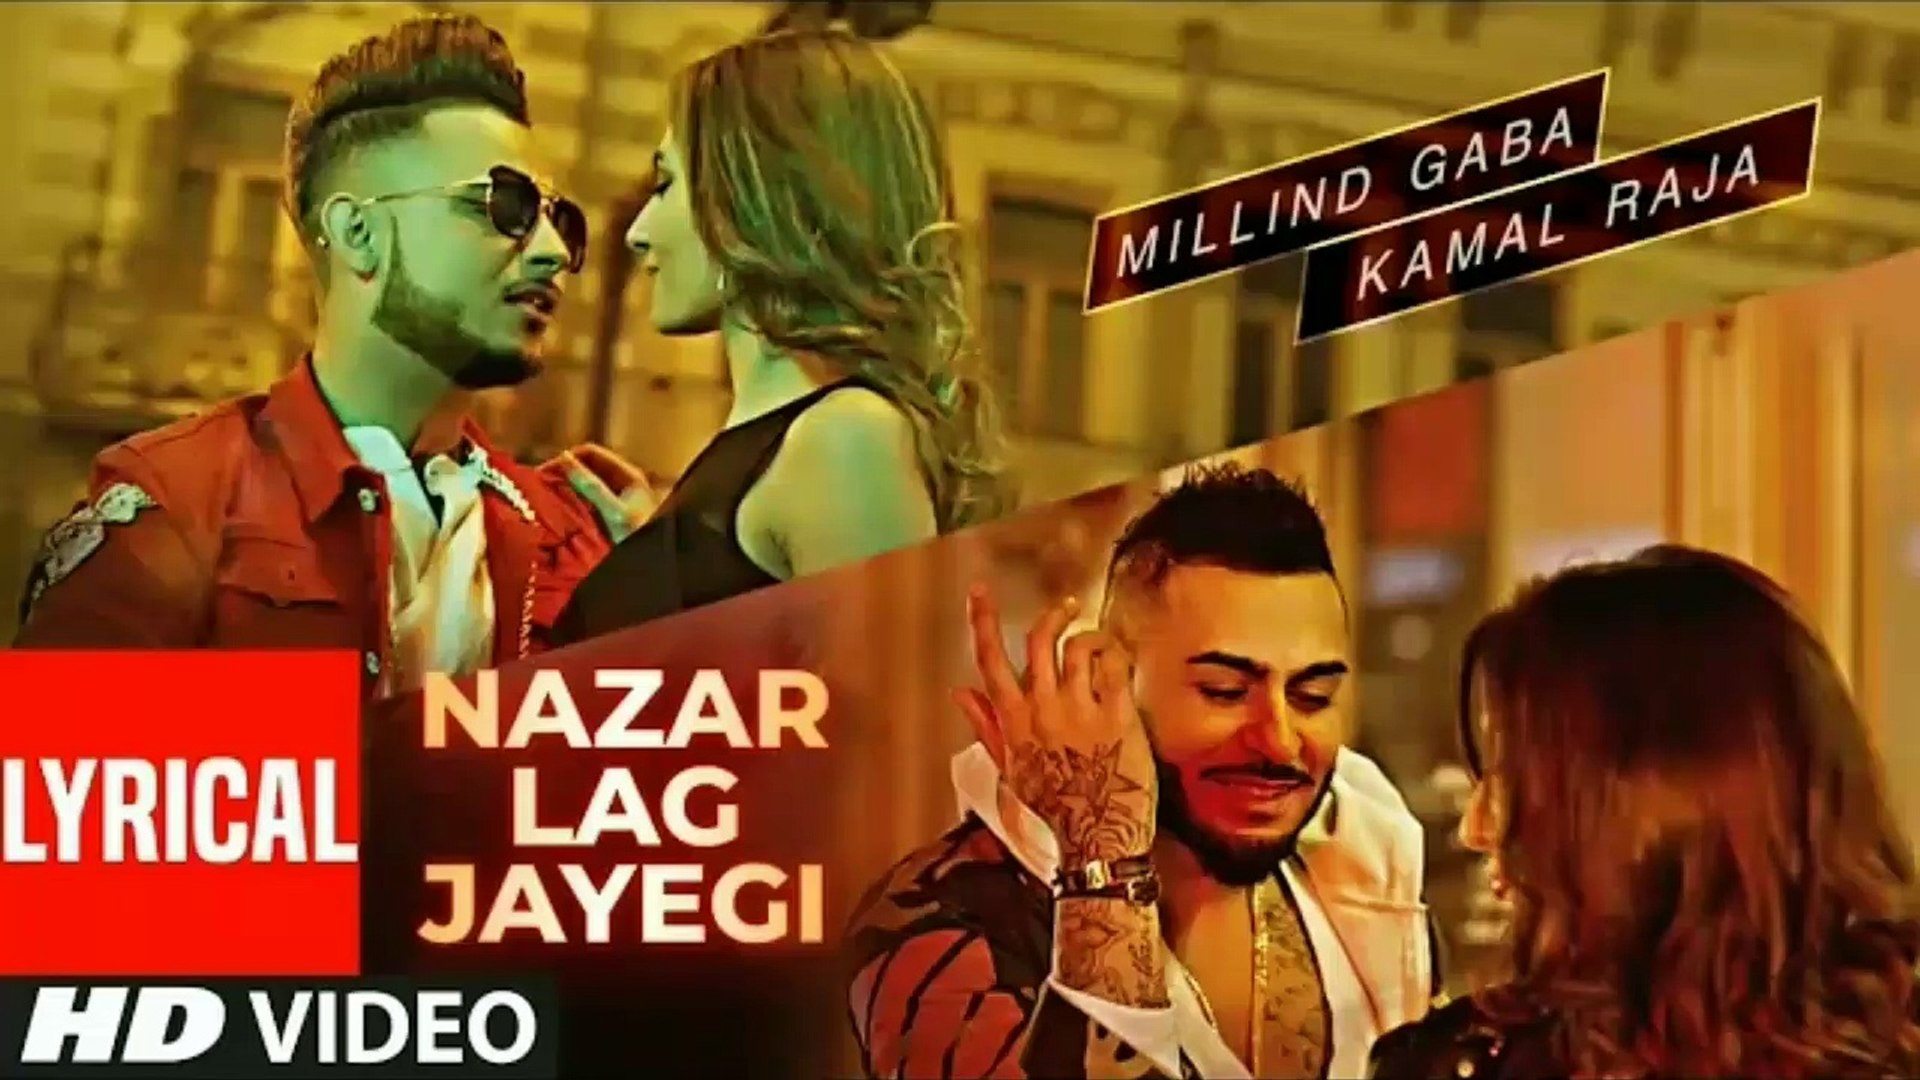 NAZAR LAG JAYEGI With Lyrics | Millind Gaba, Kamal Raja | Shabby | - video  Dailymotion